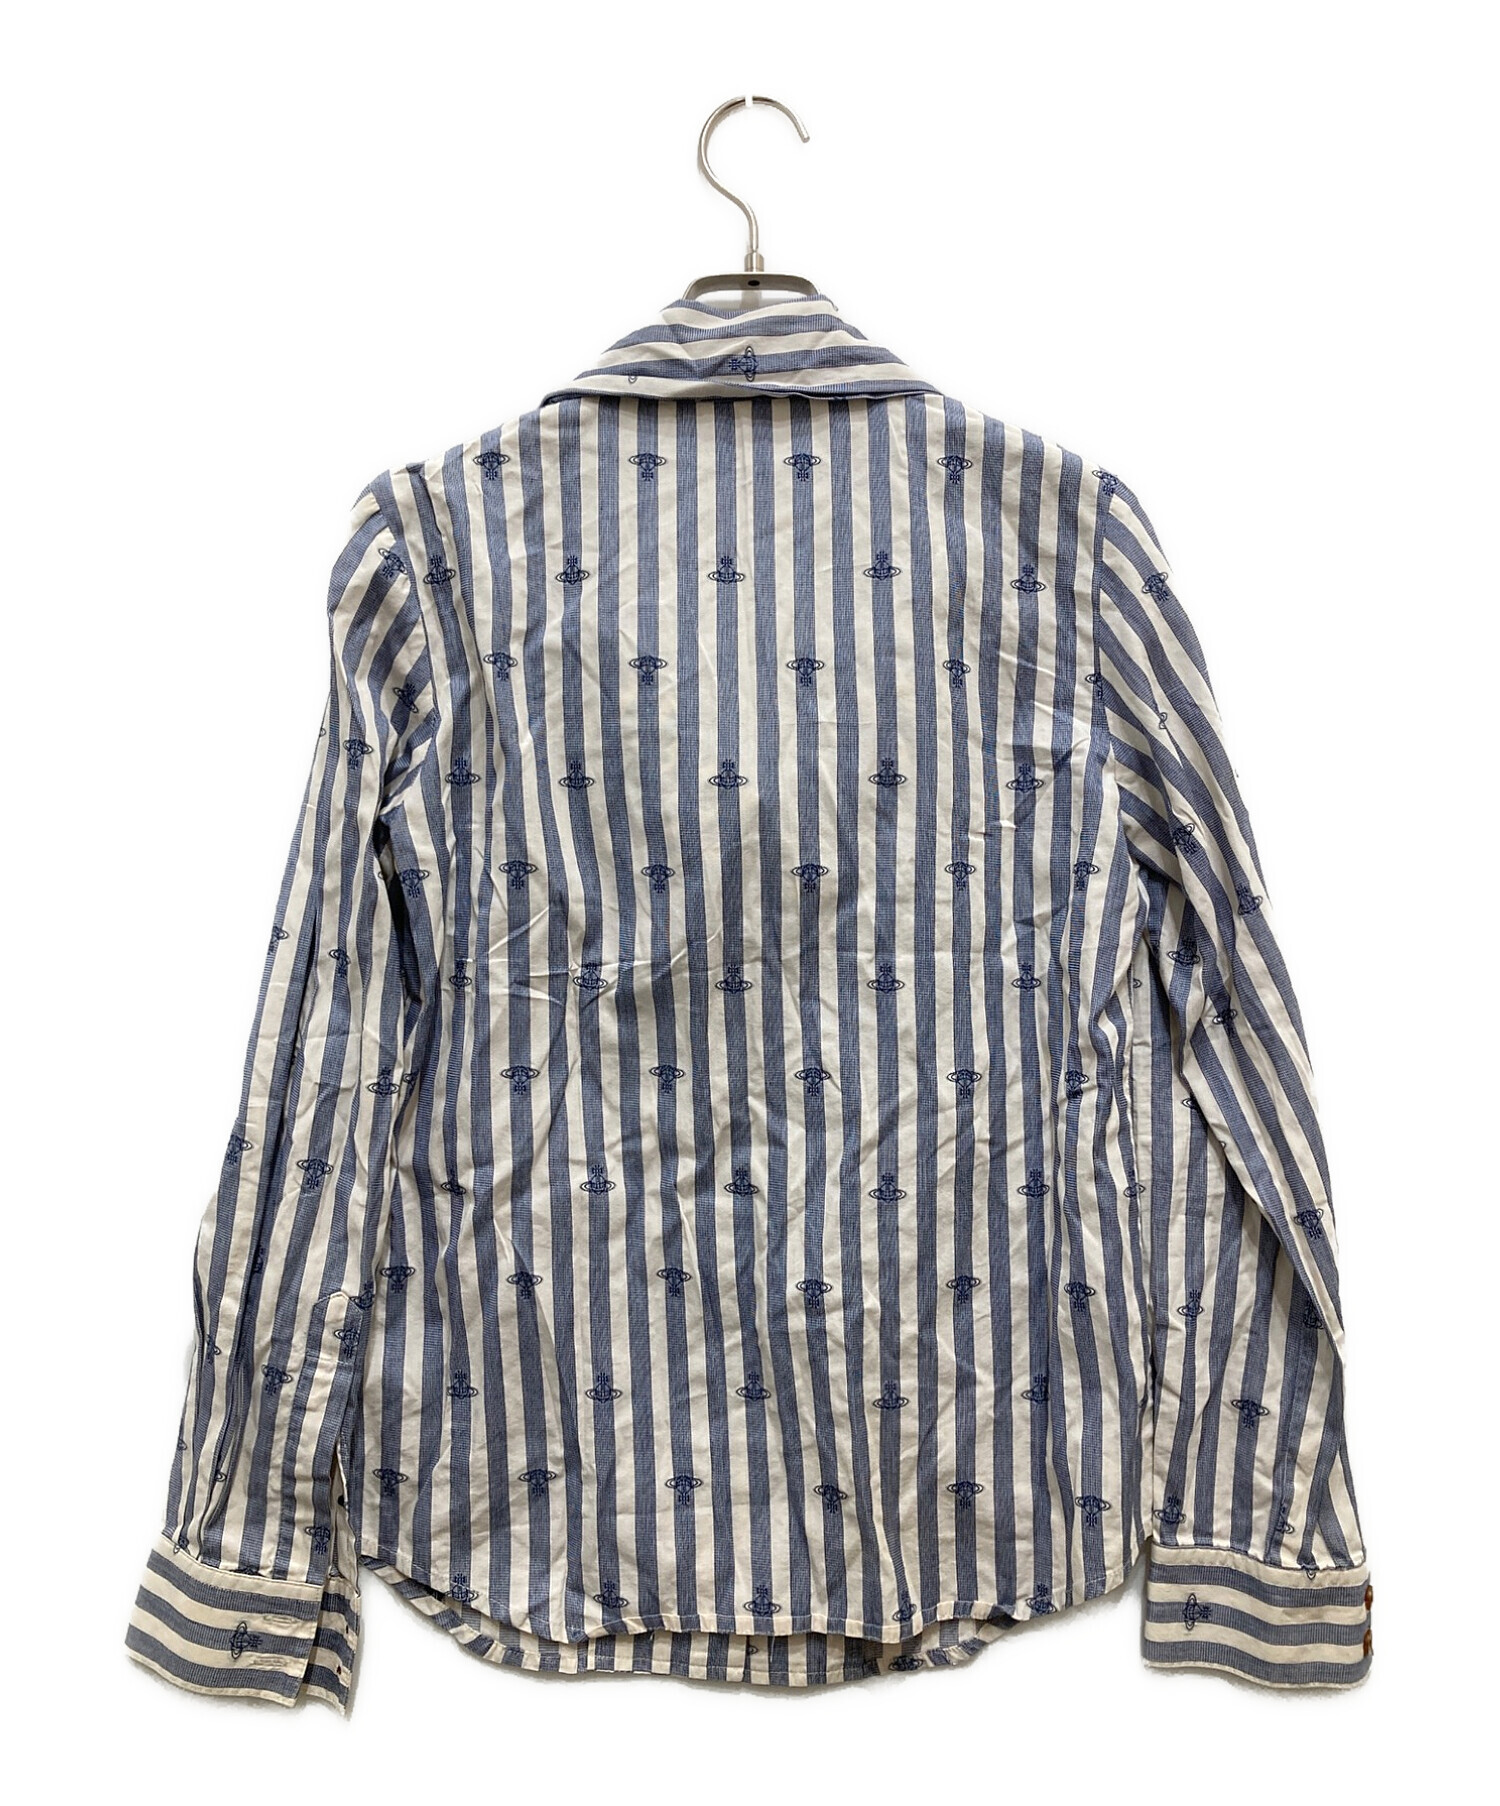 Vivienne Westwood (ヴィヴィアンウエストウッド) オーブ刺繍デザインカラーシャツ サイズ:表記無し(実寸サイズをご参照下さい)